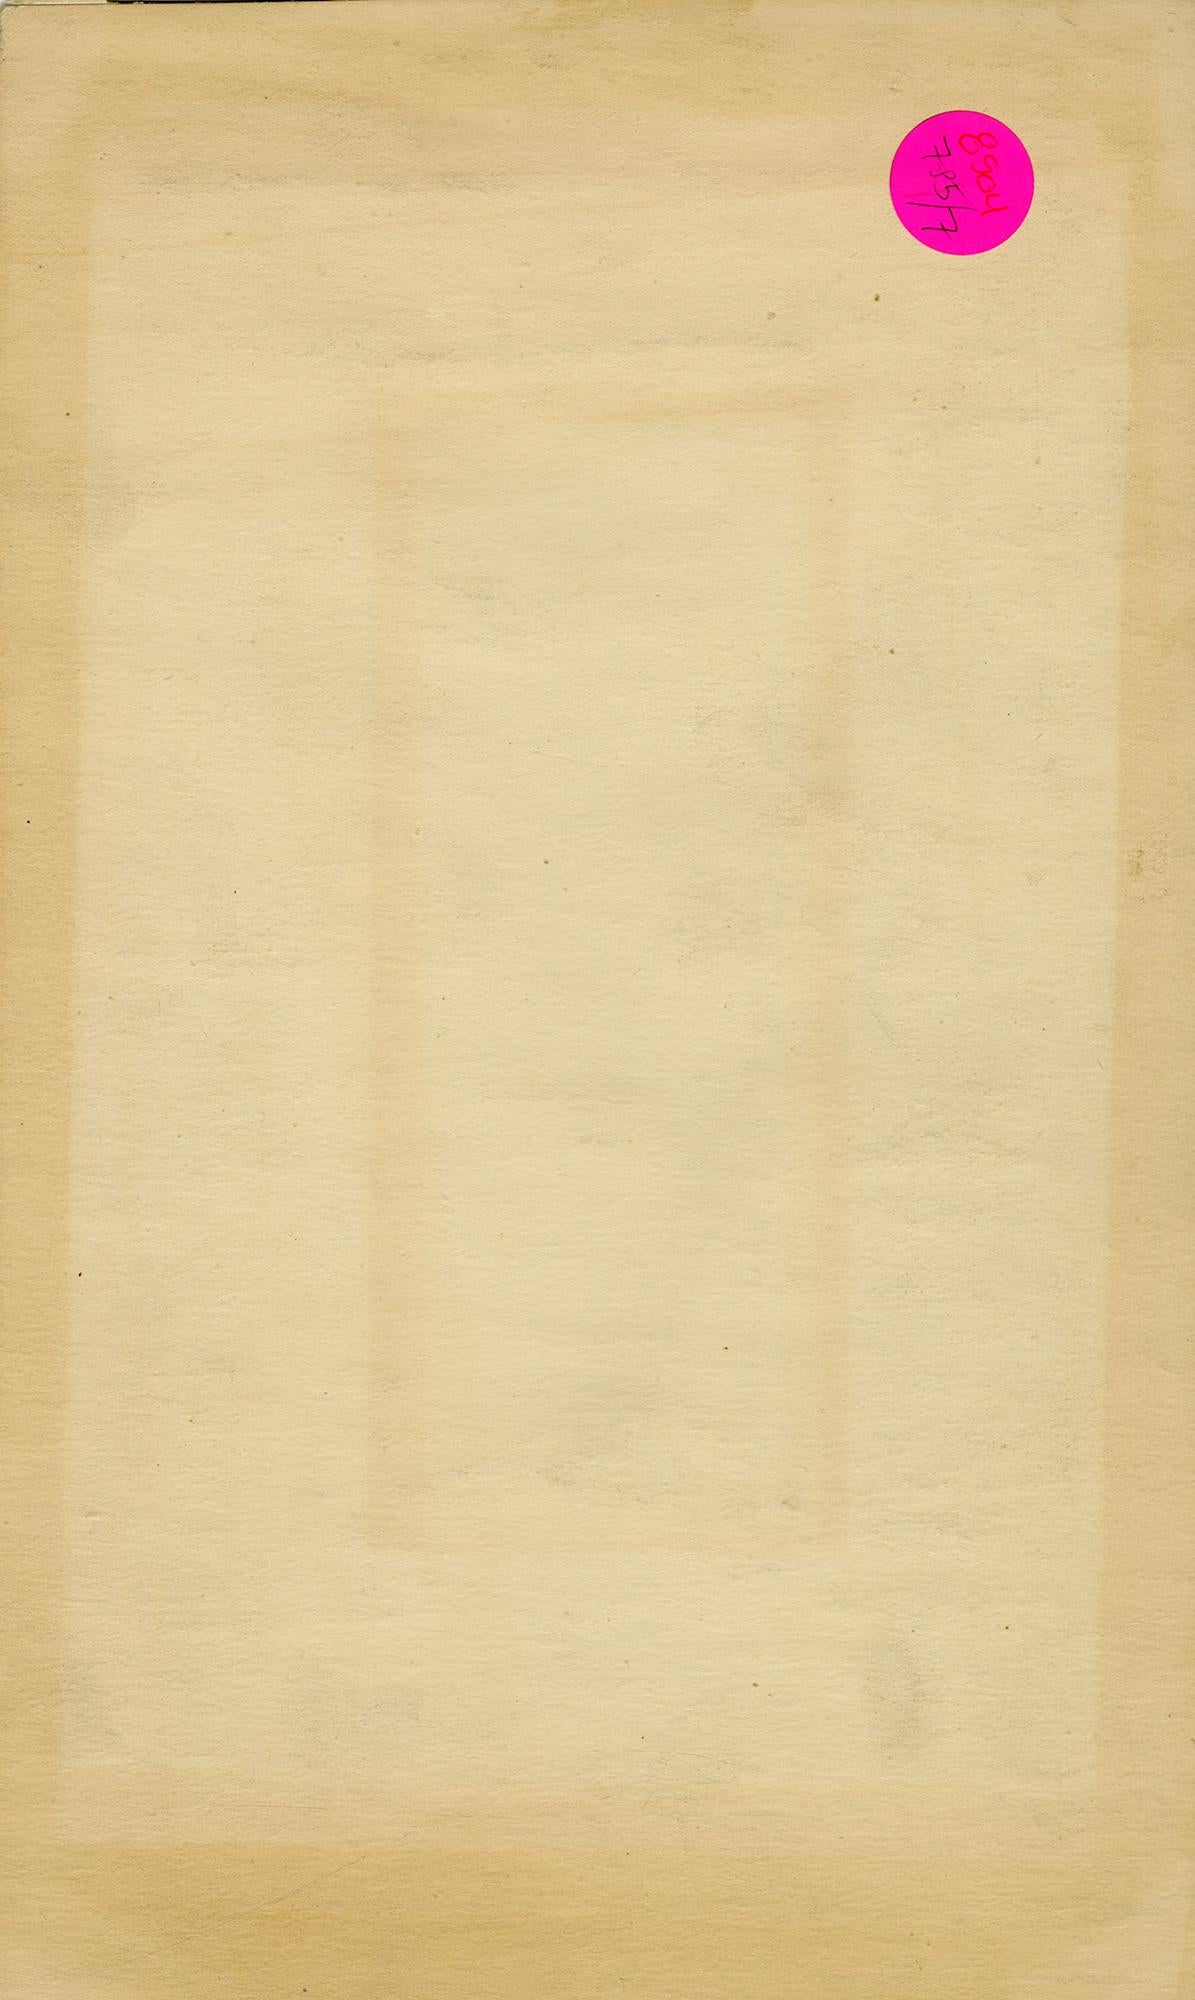 Dyeing Paper - Edo Print by Okumura Masanobu